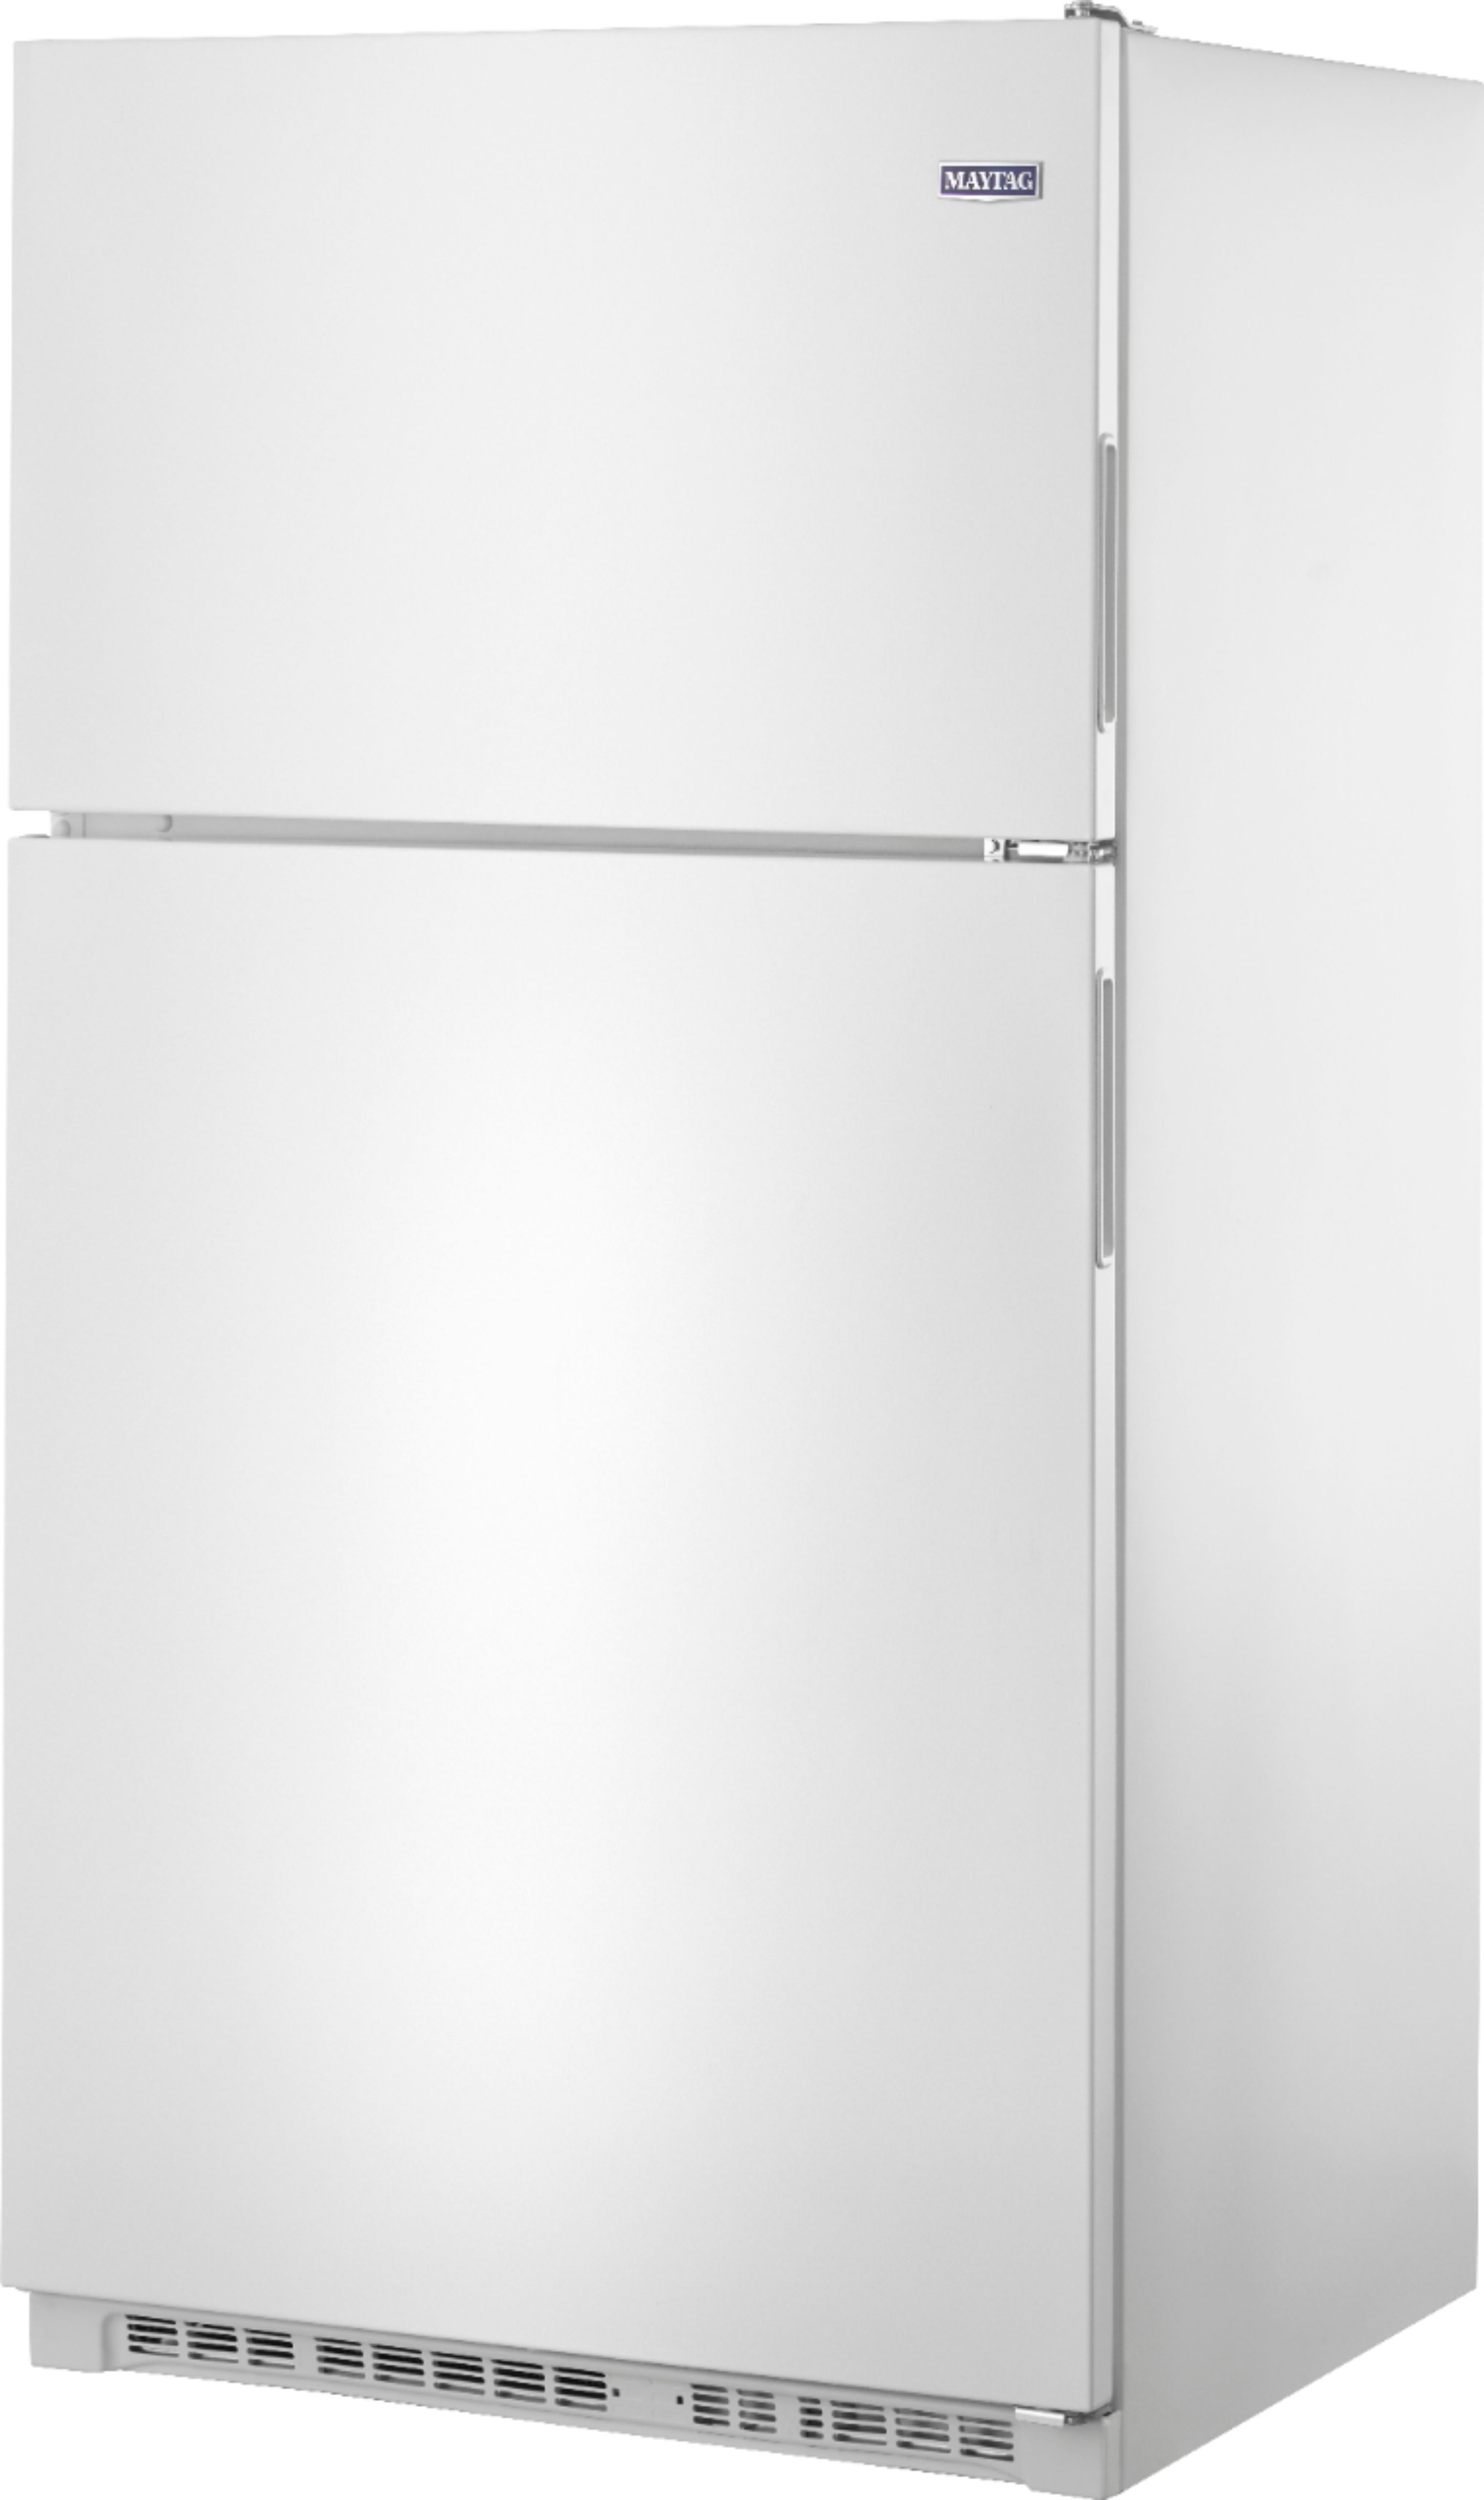 Left View: Whirlpool - 16.0 Cu. Ft. Top-Freezer Refrigerator - Monochromatic stainless steel